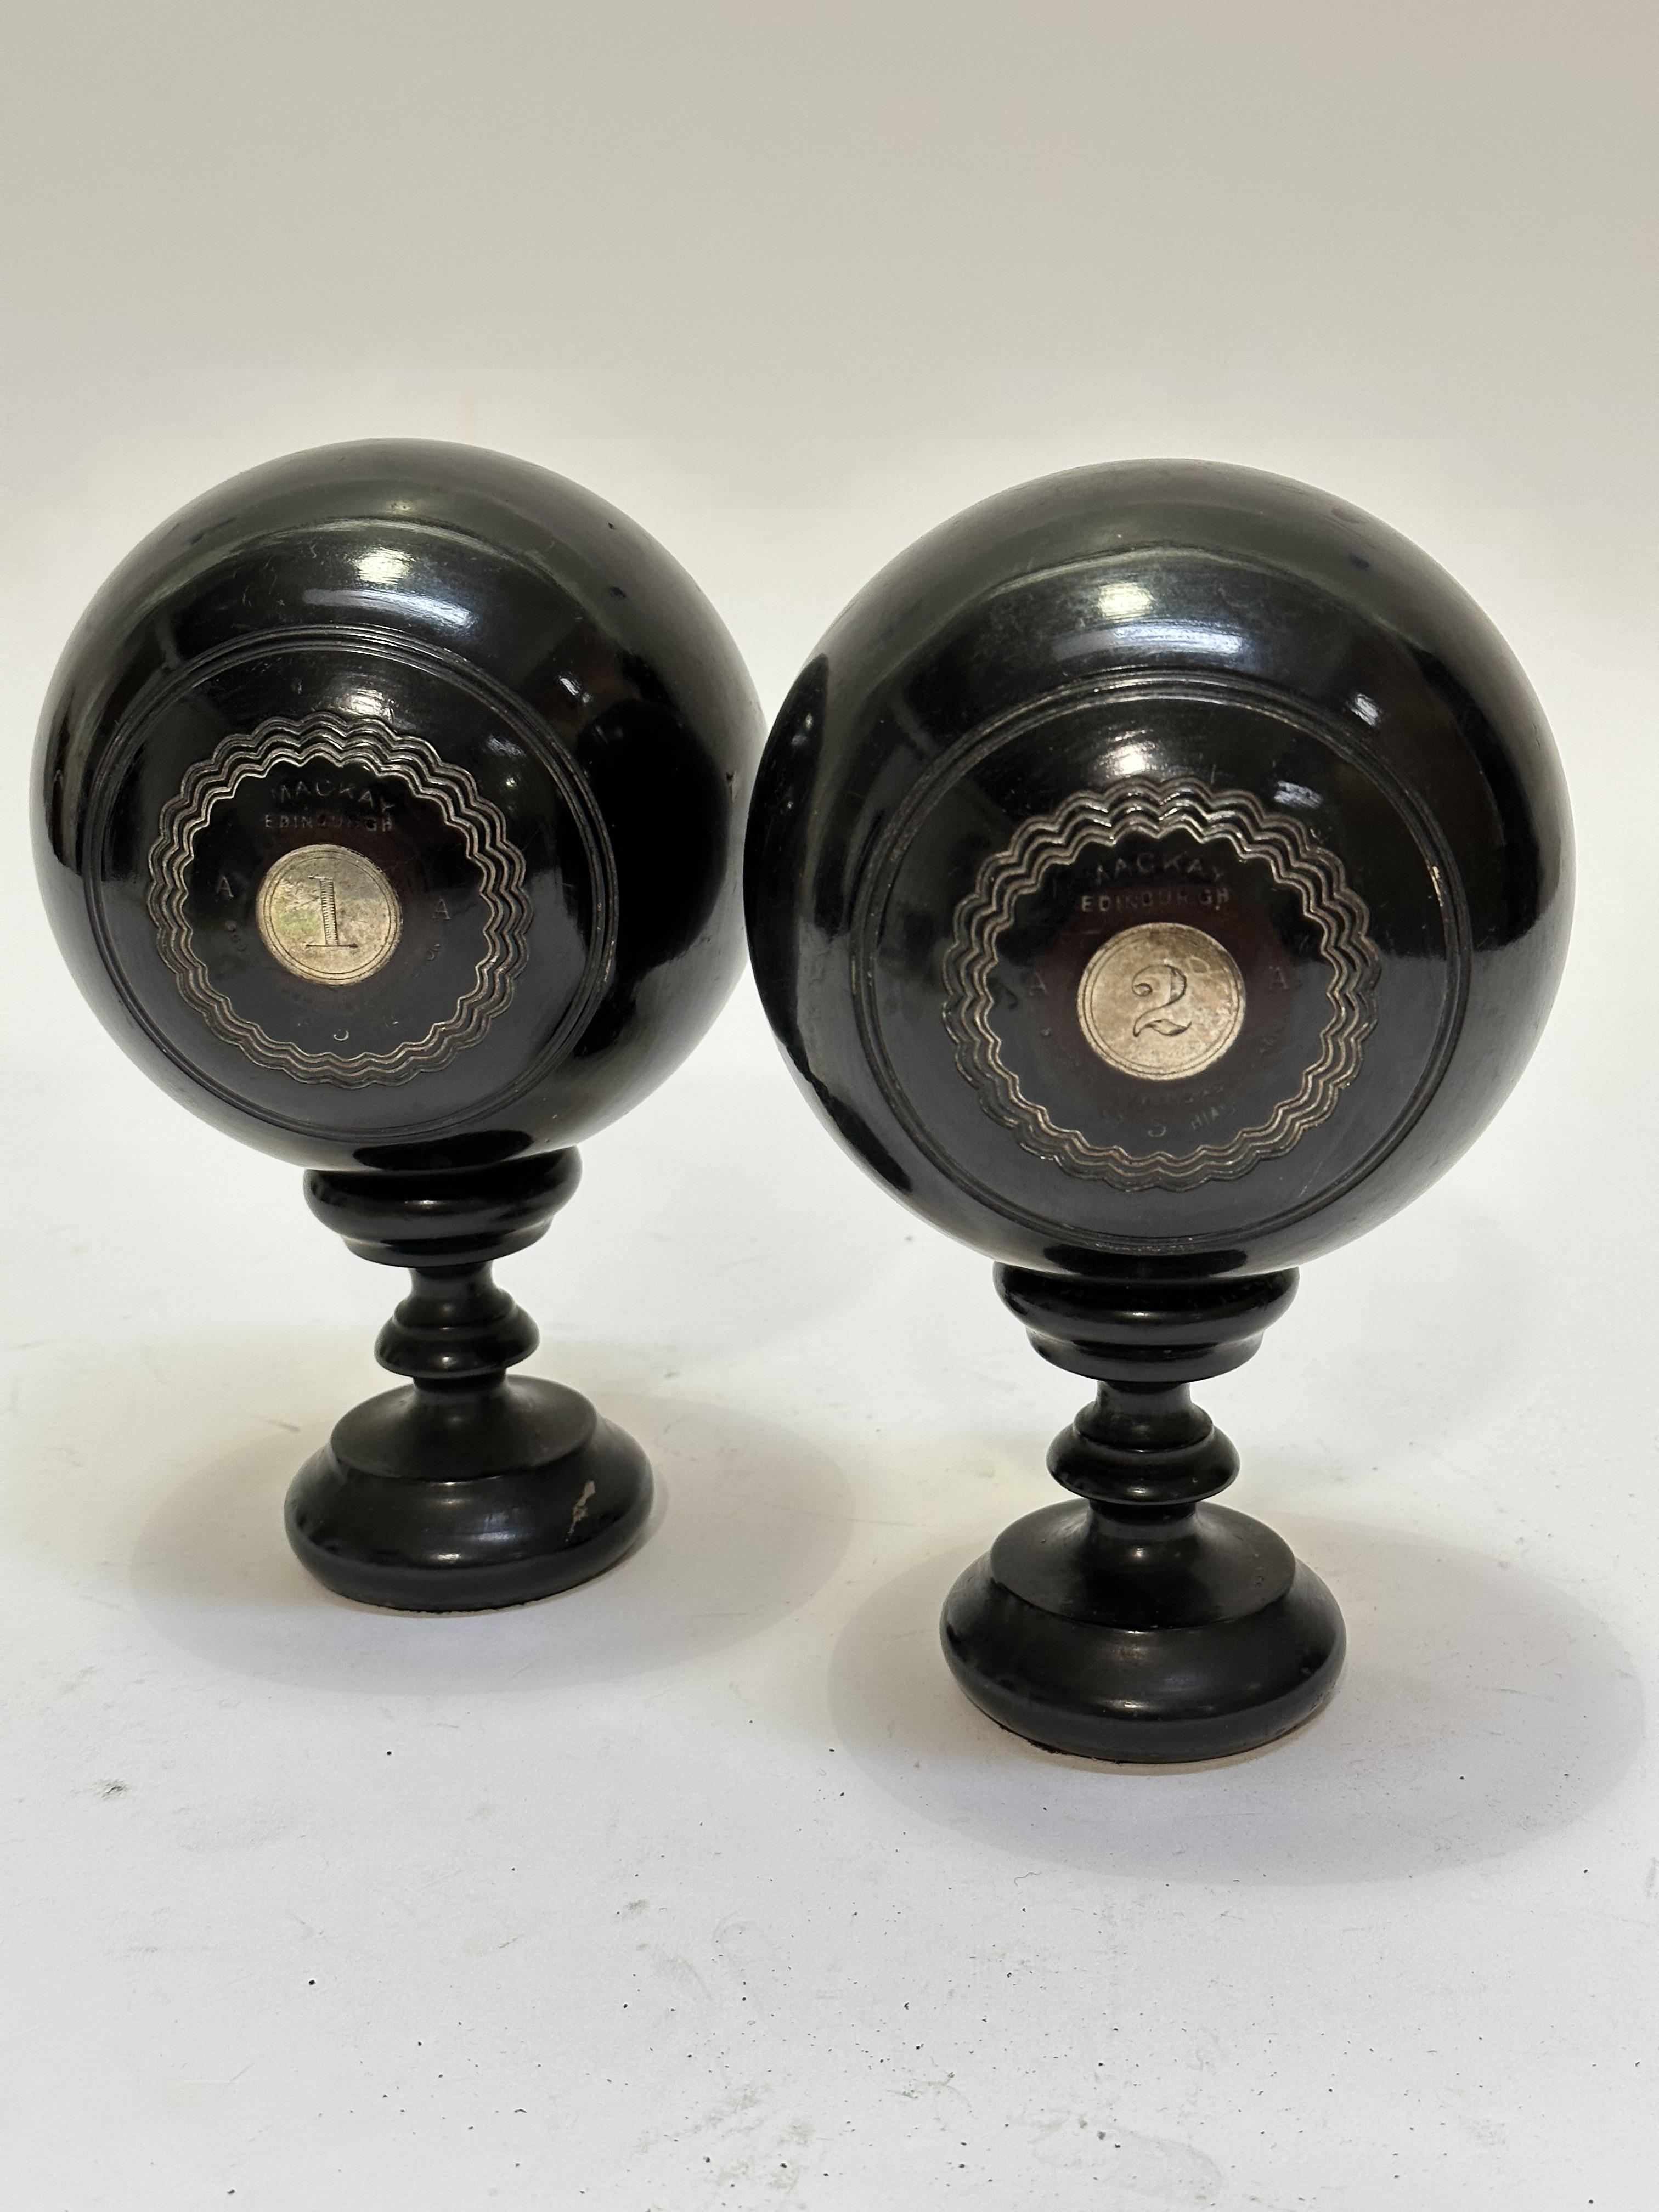 A pair of ebony silver mounted bowls by Mackay of Edinburgh, Scottish Bowling Association - Image 3 of 5